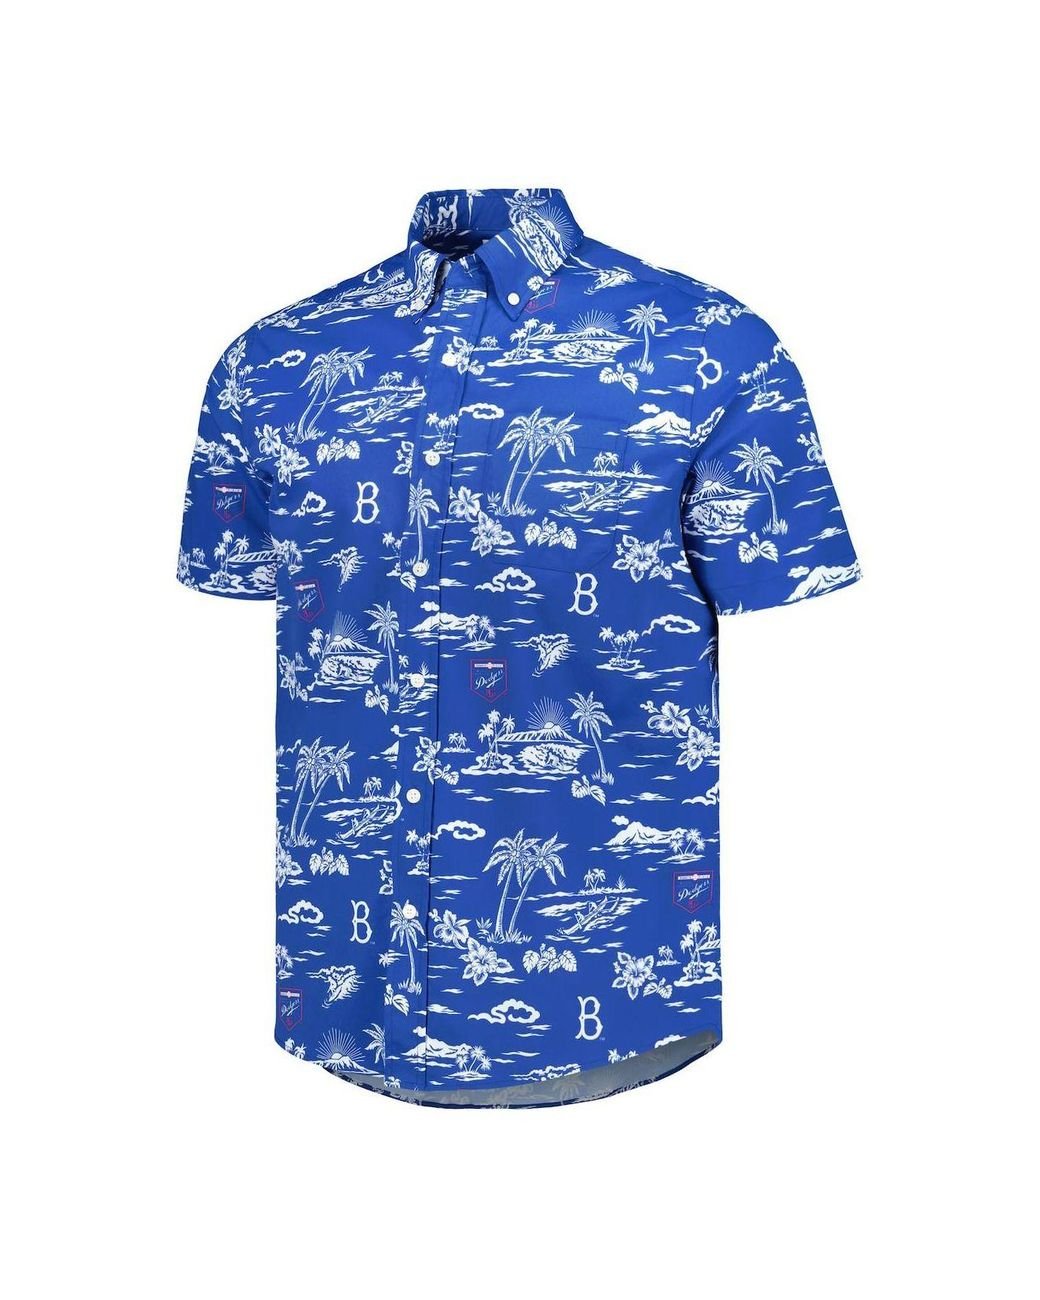 Reyn Spooner Blue Los Angeles Dodgers Kekai Button-up Shirt for